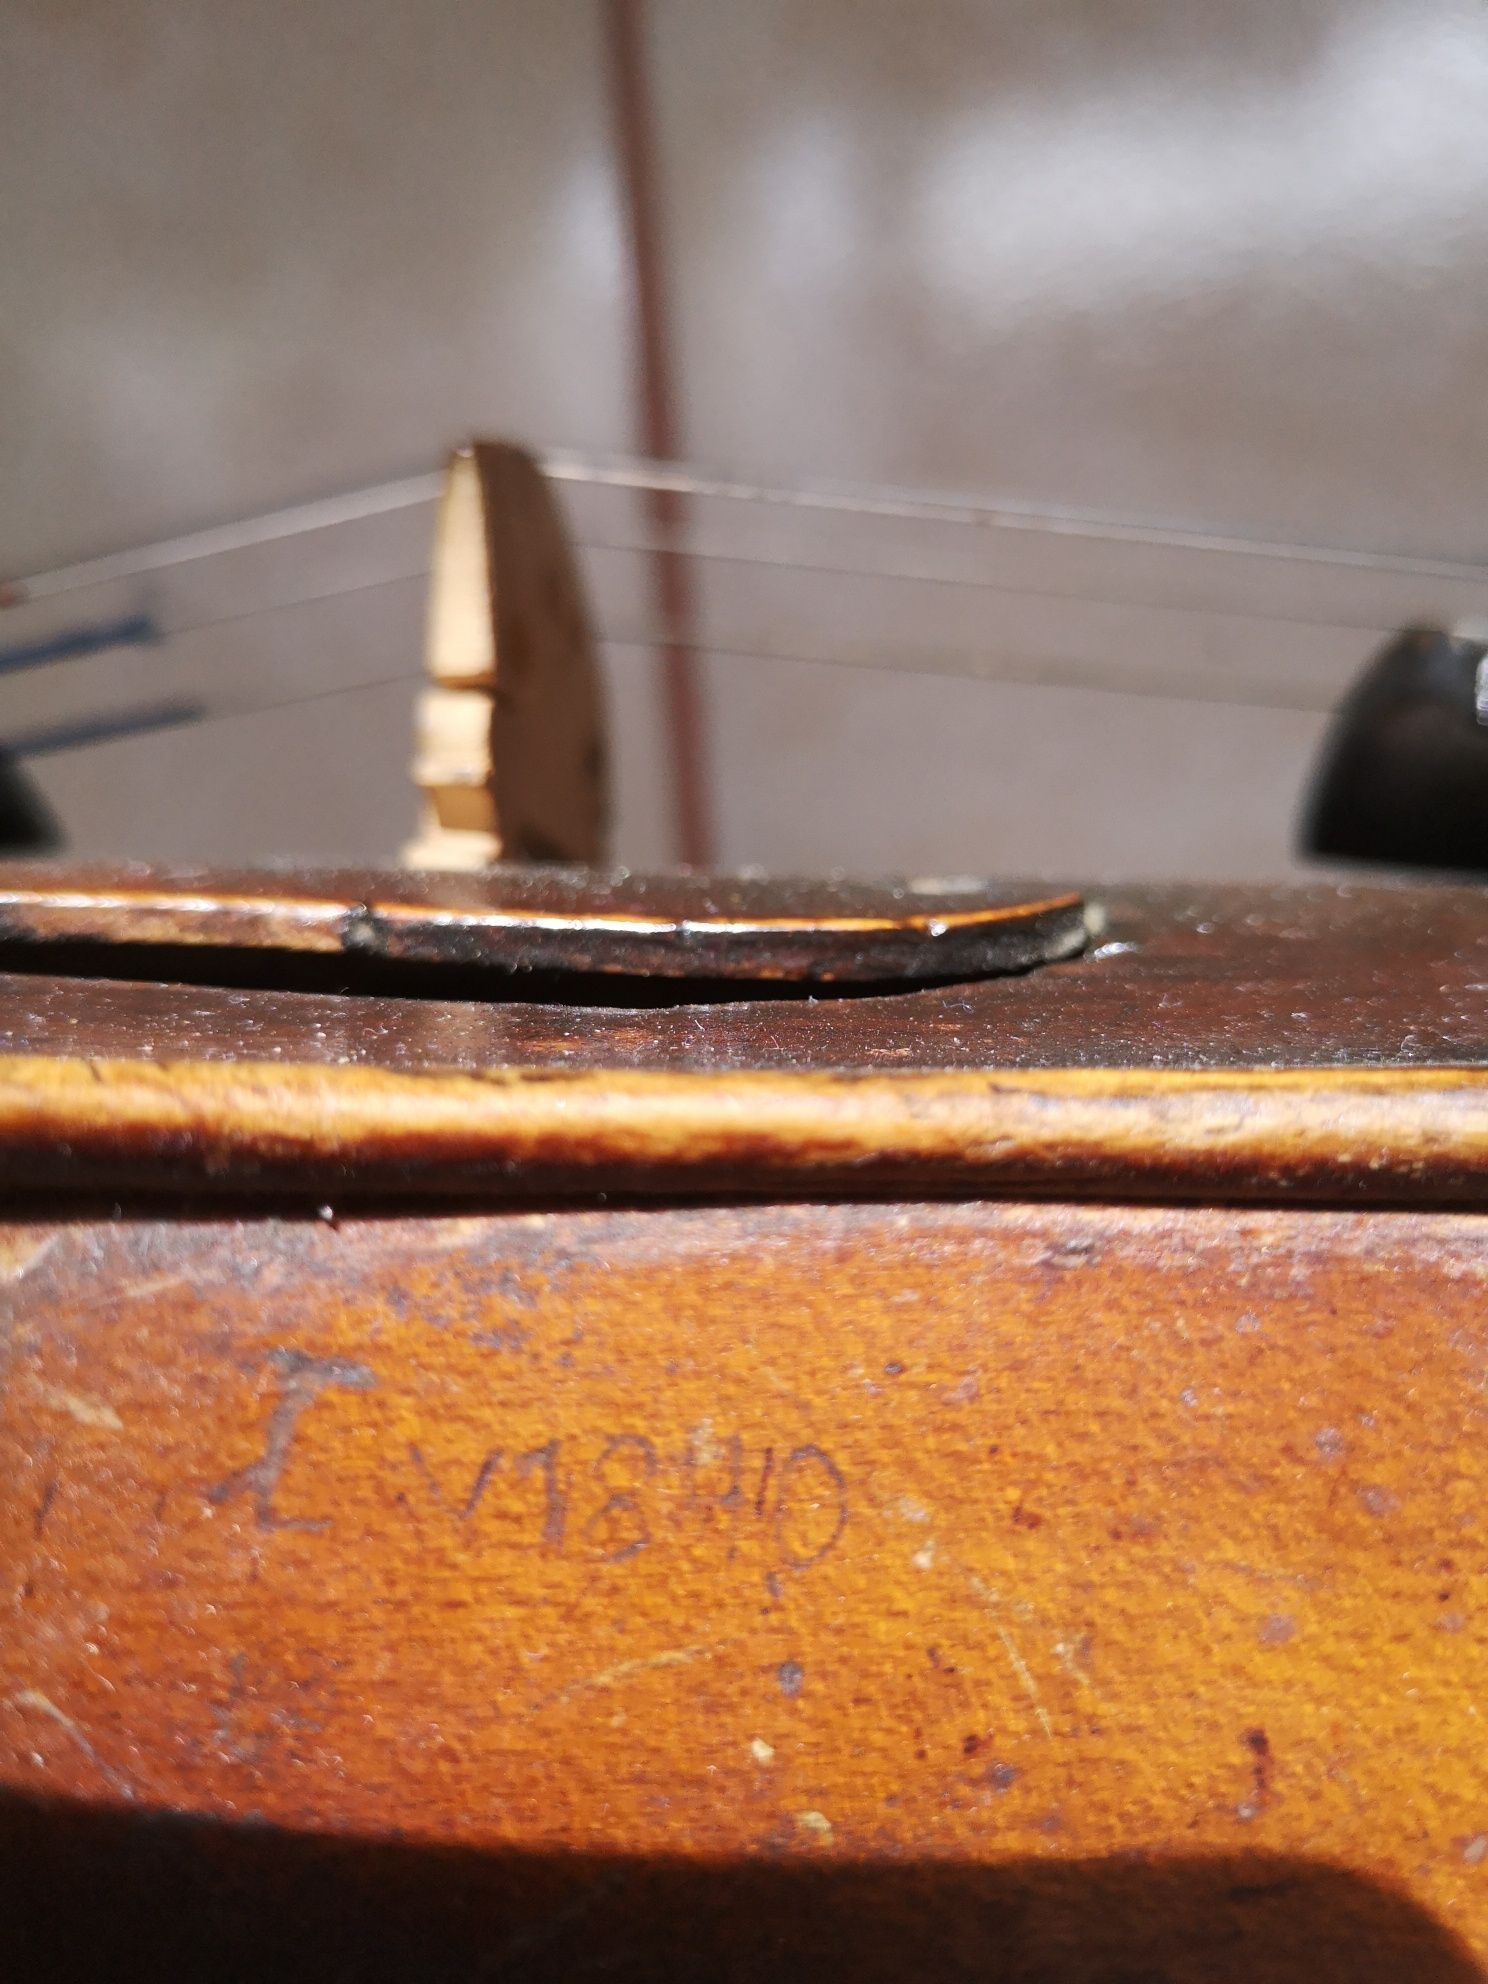 Vand vioara veche model Stradivari